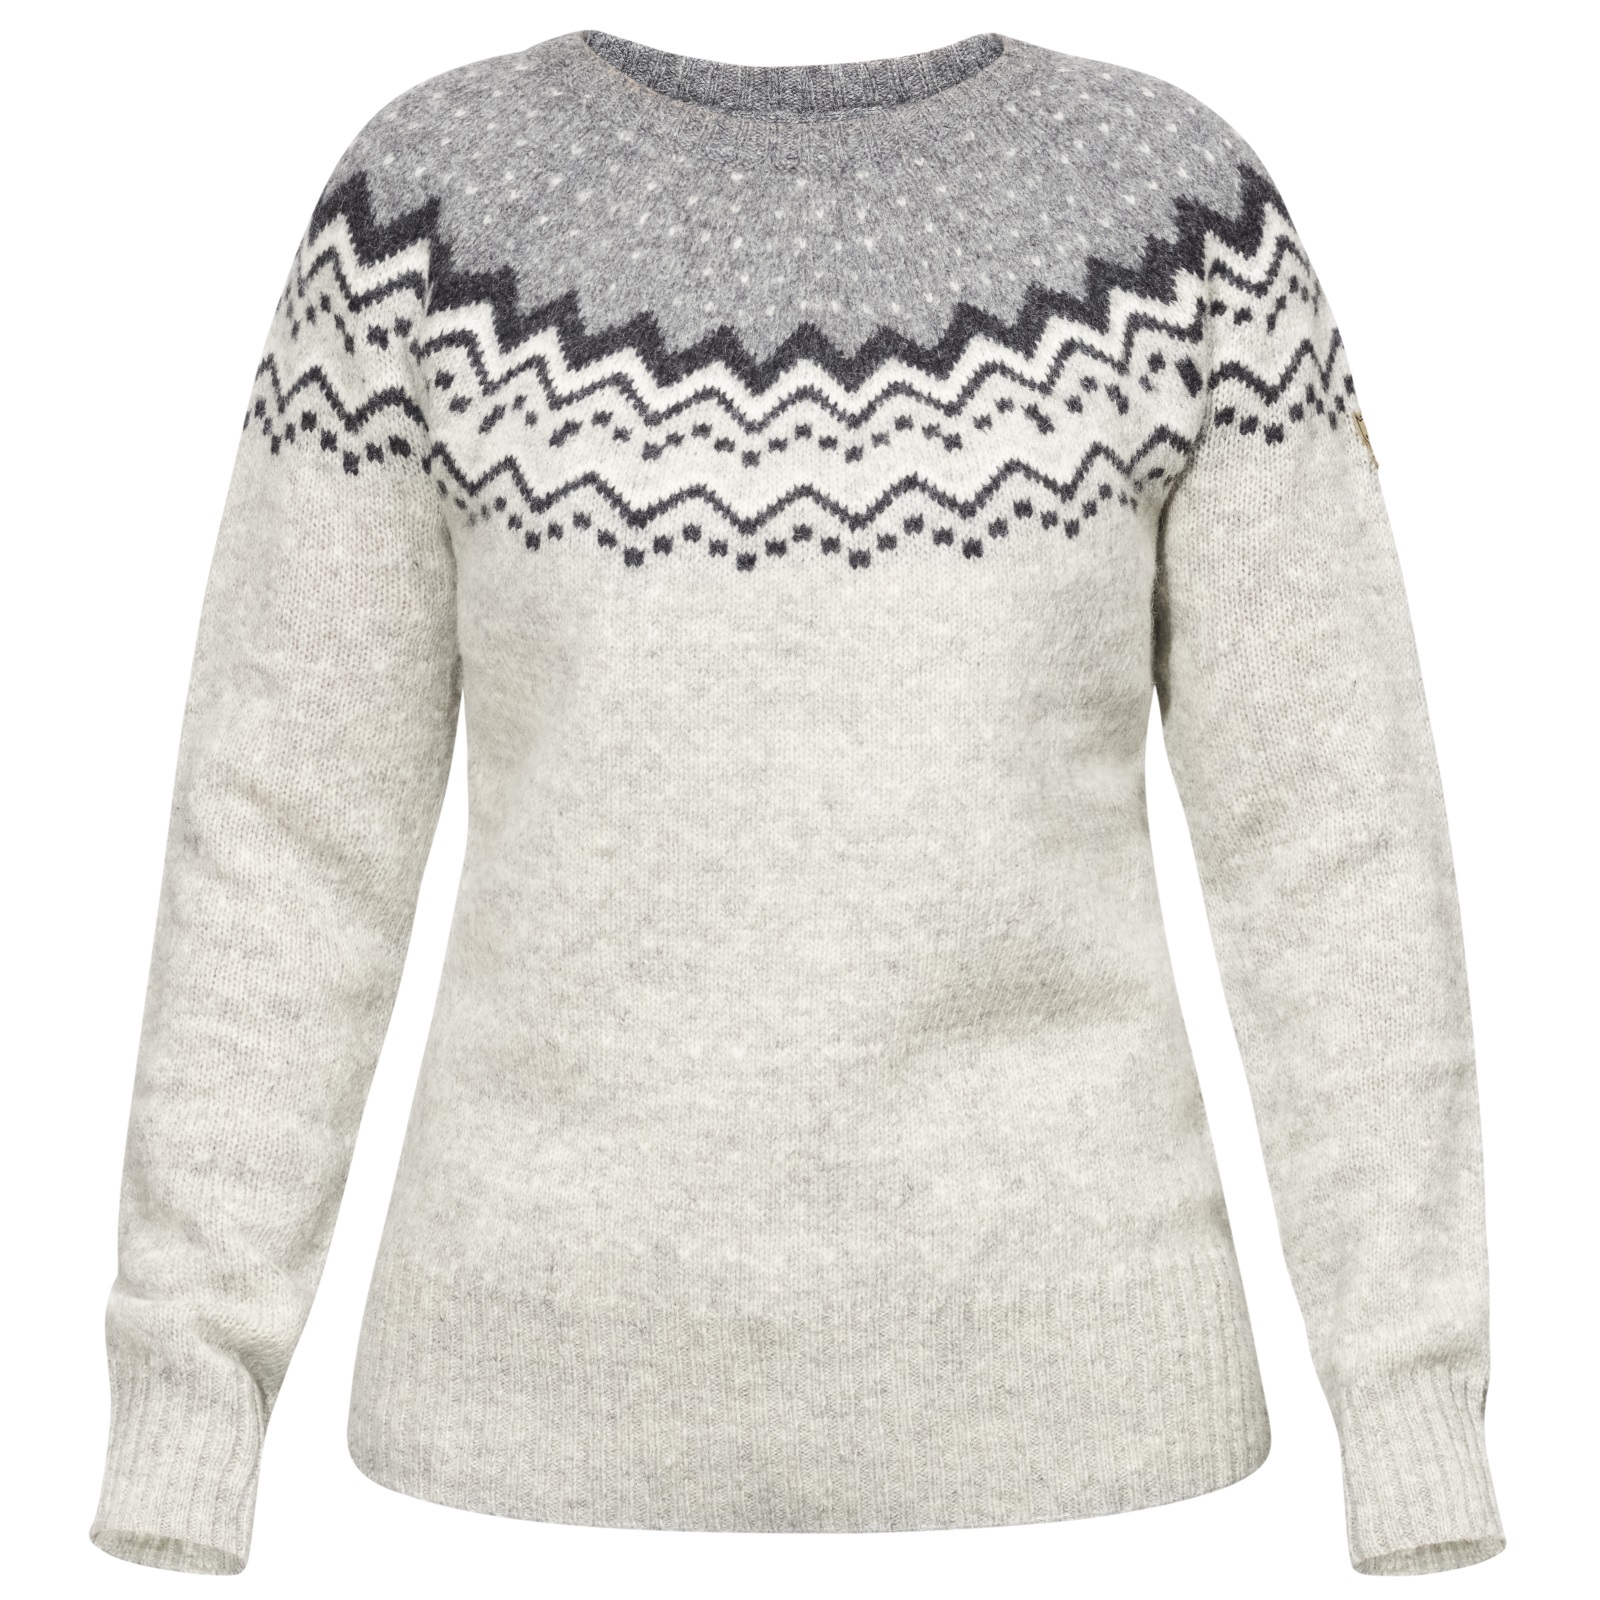 Fjällräven Women’s Övik Knit Sweater Grey